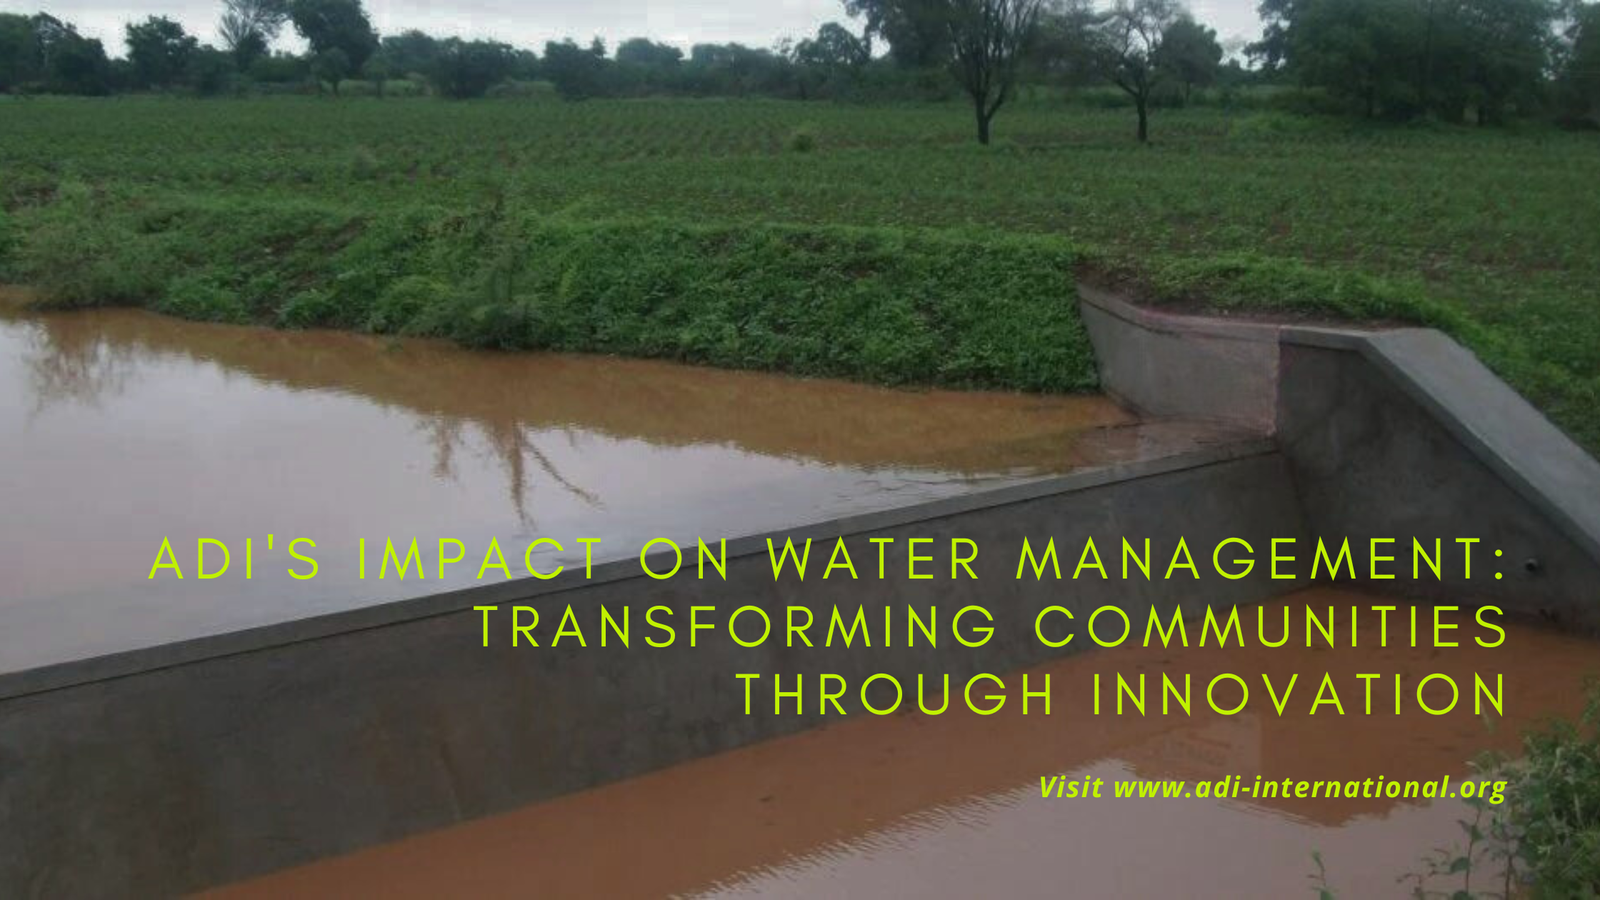 ADI's Impact on Water Management: Transforming Communities Through Innovation